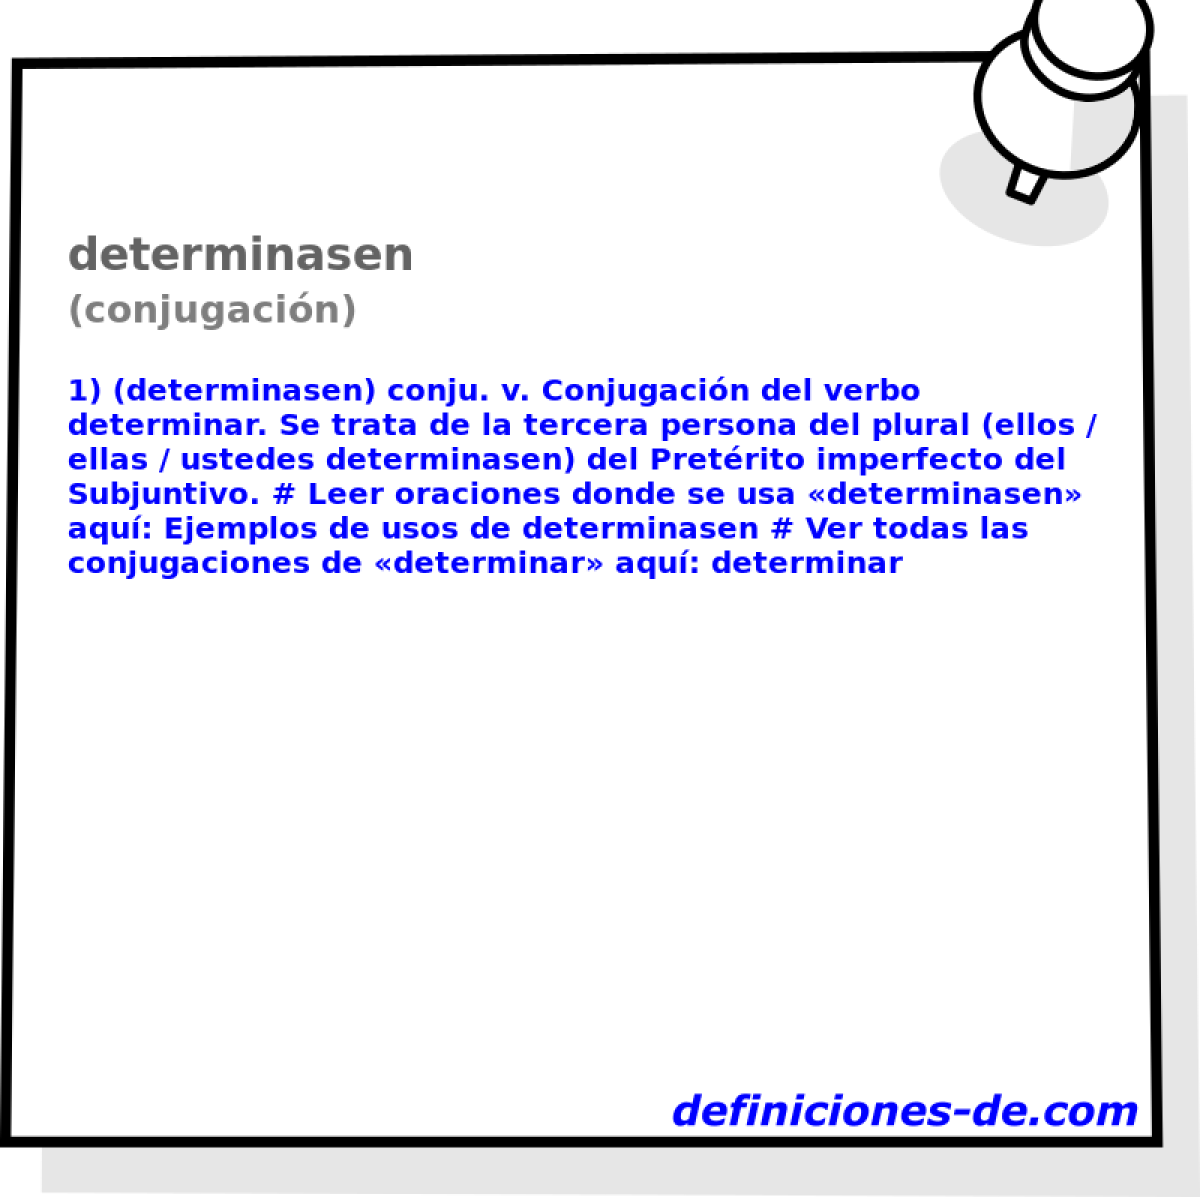 determinasen (conjugacin)